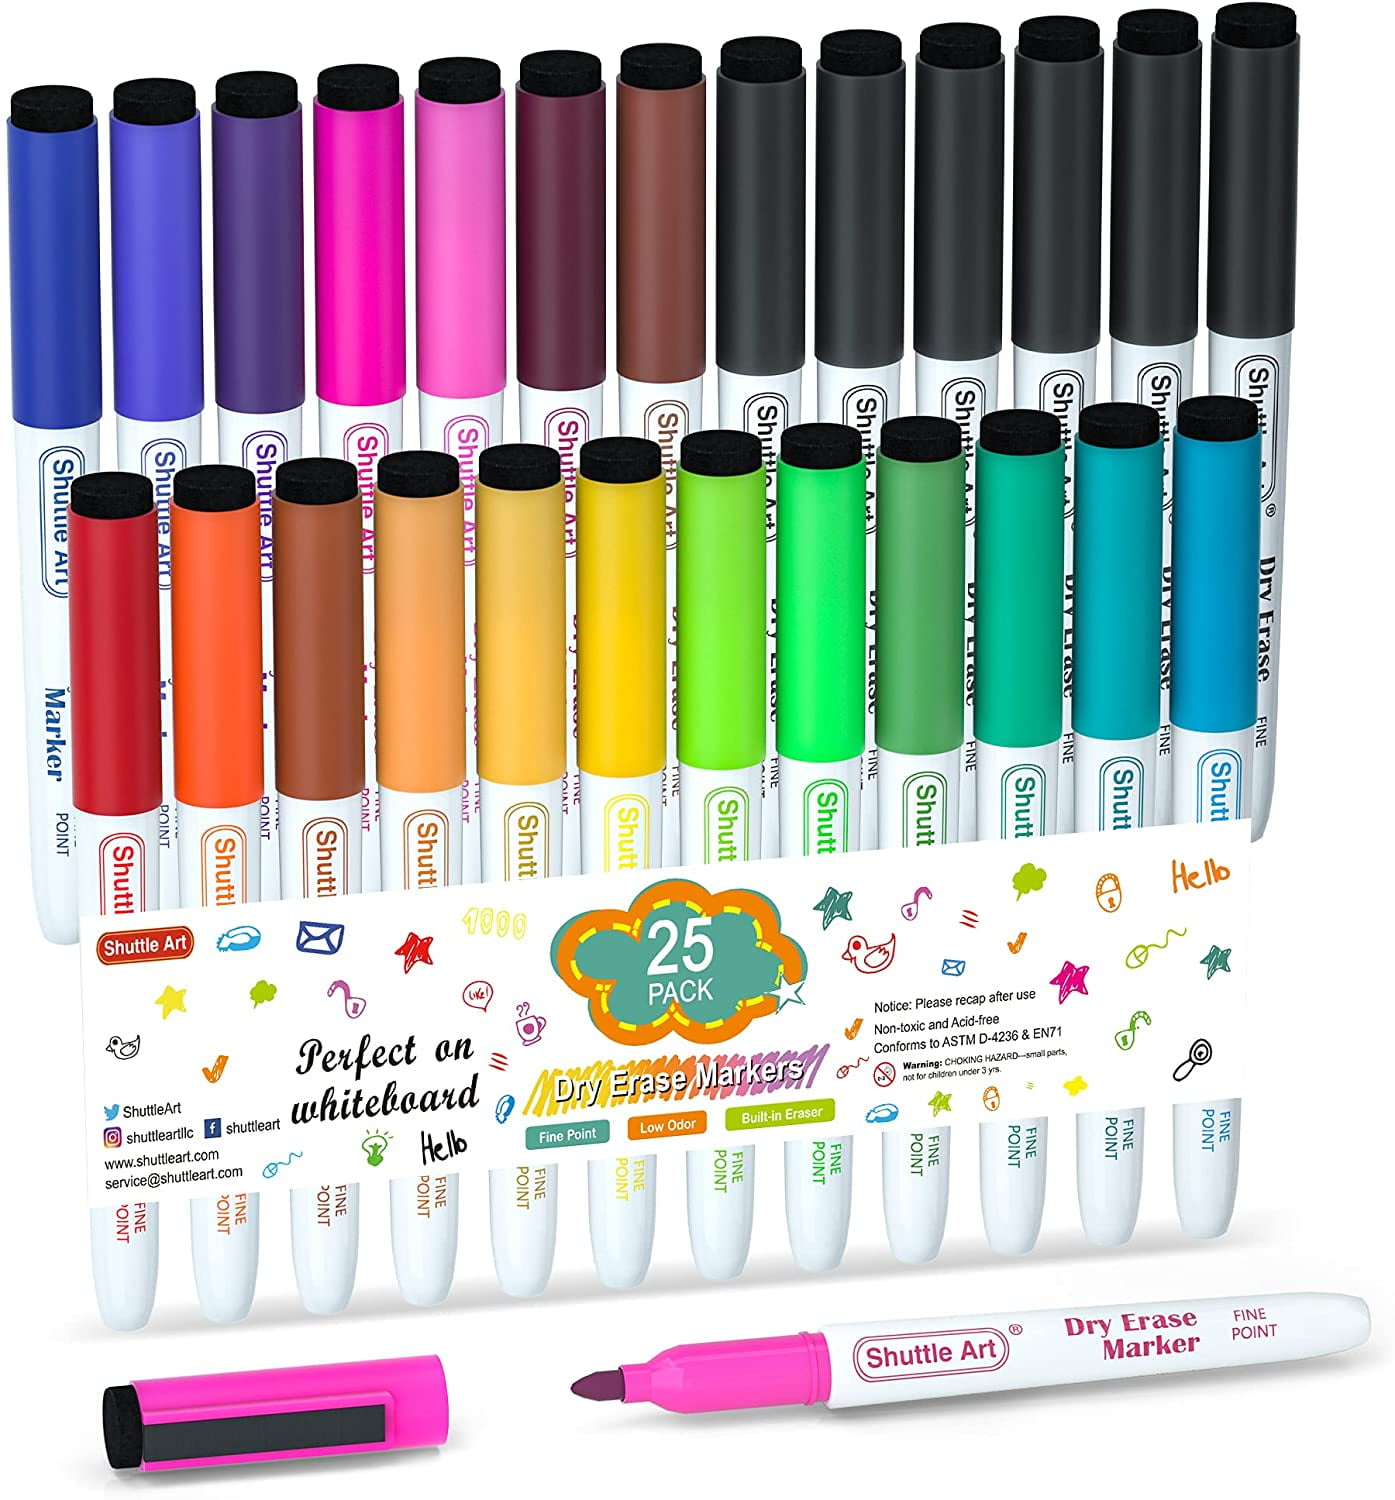 Marking pen core, graphite, multi color, 8pcs, Pica - Pencils